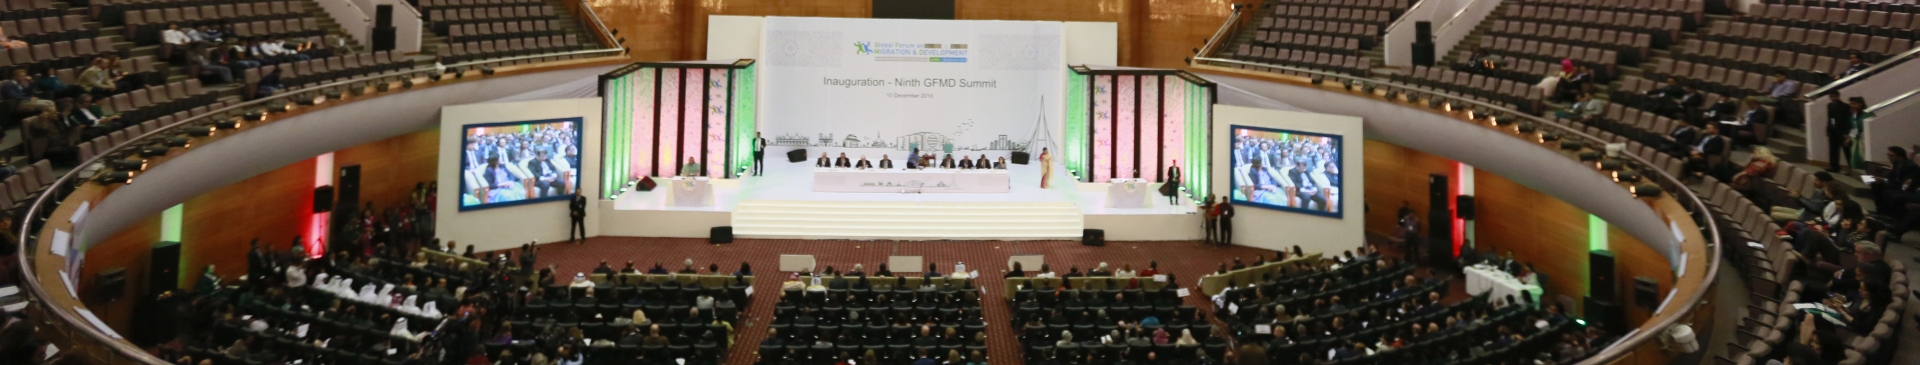 Ninth GFMD Summit Meeting